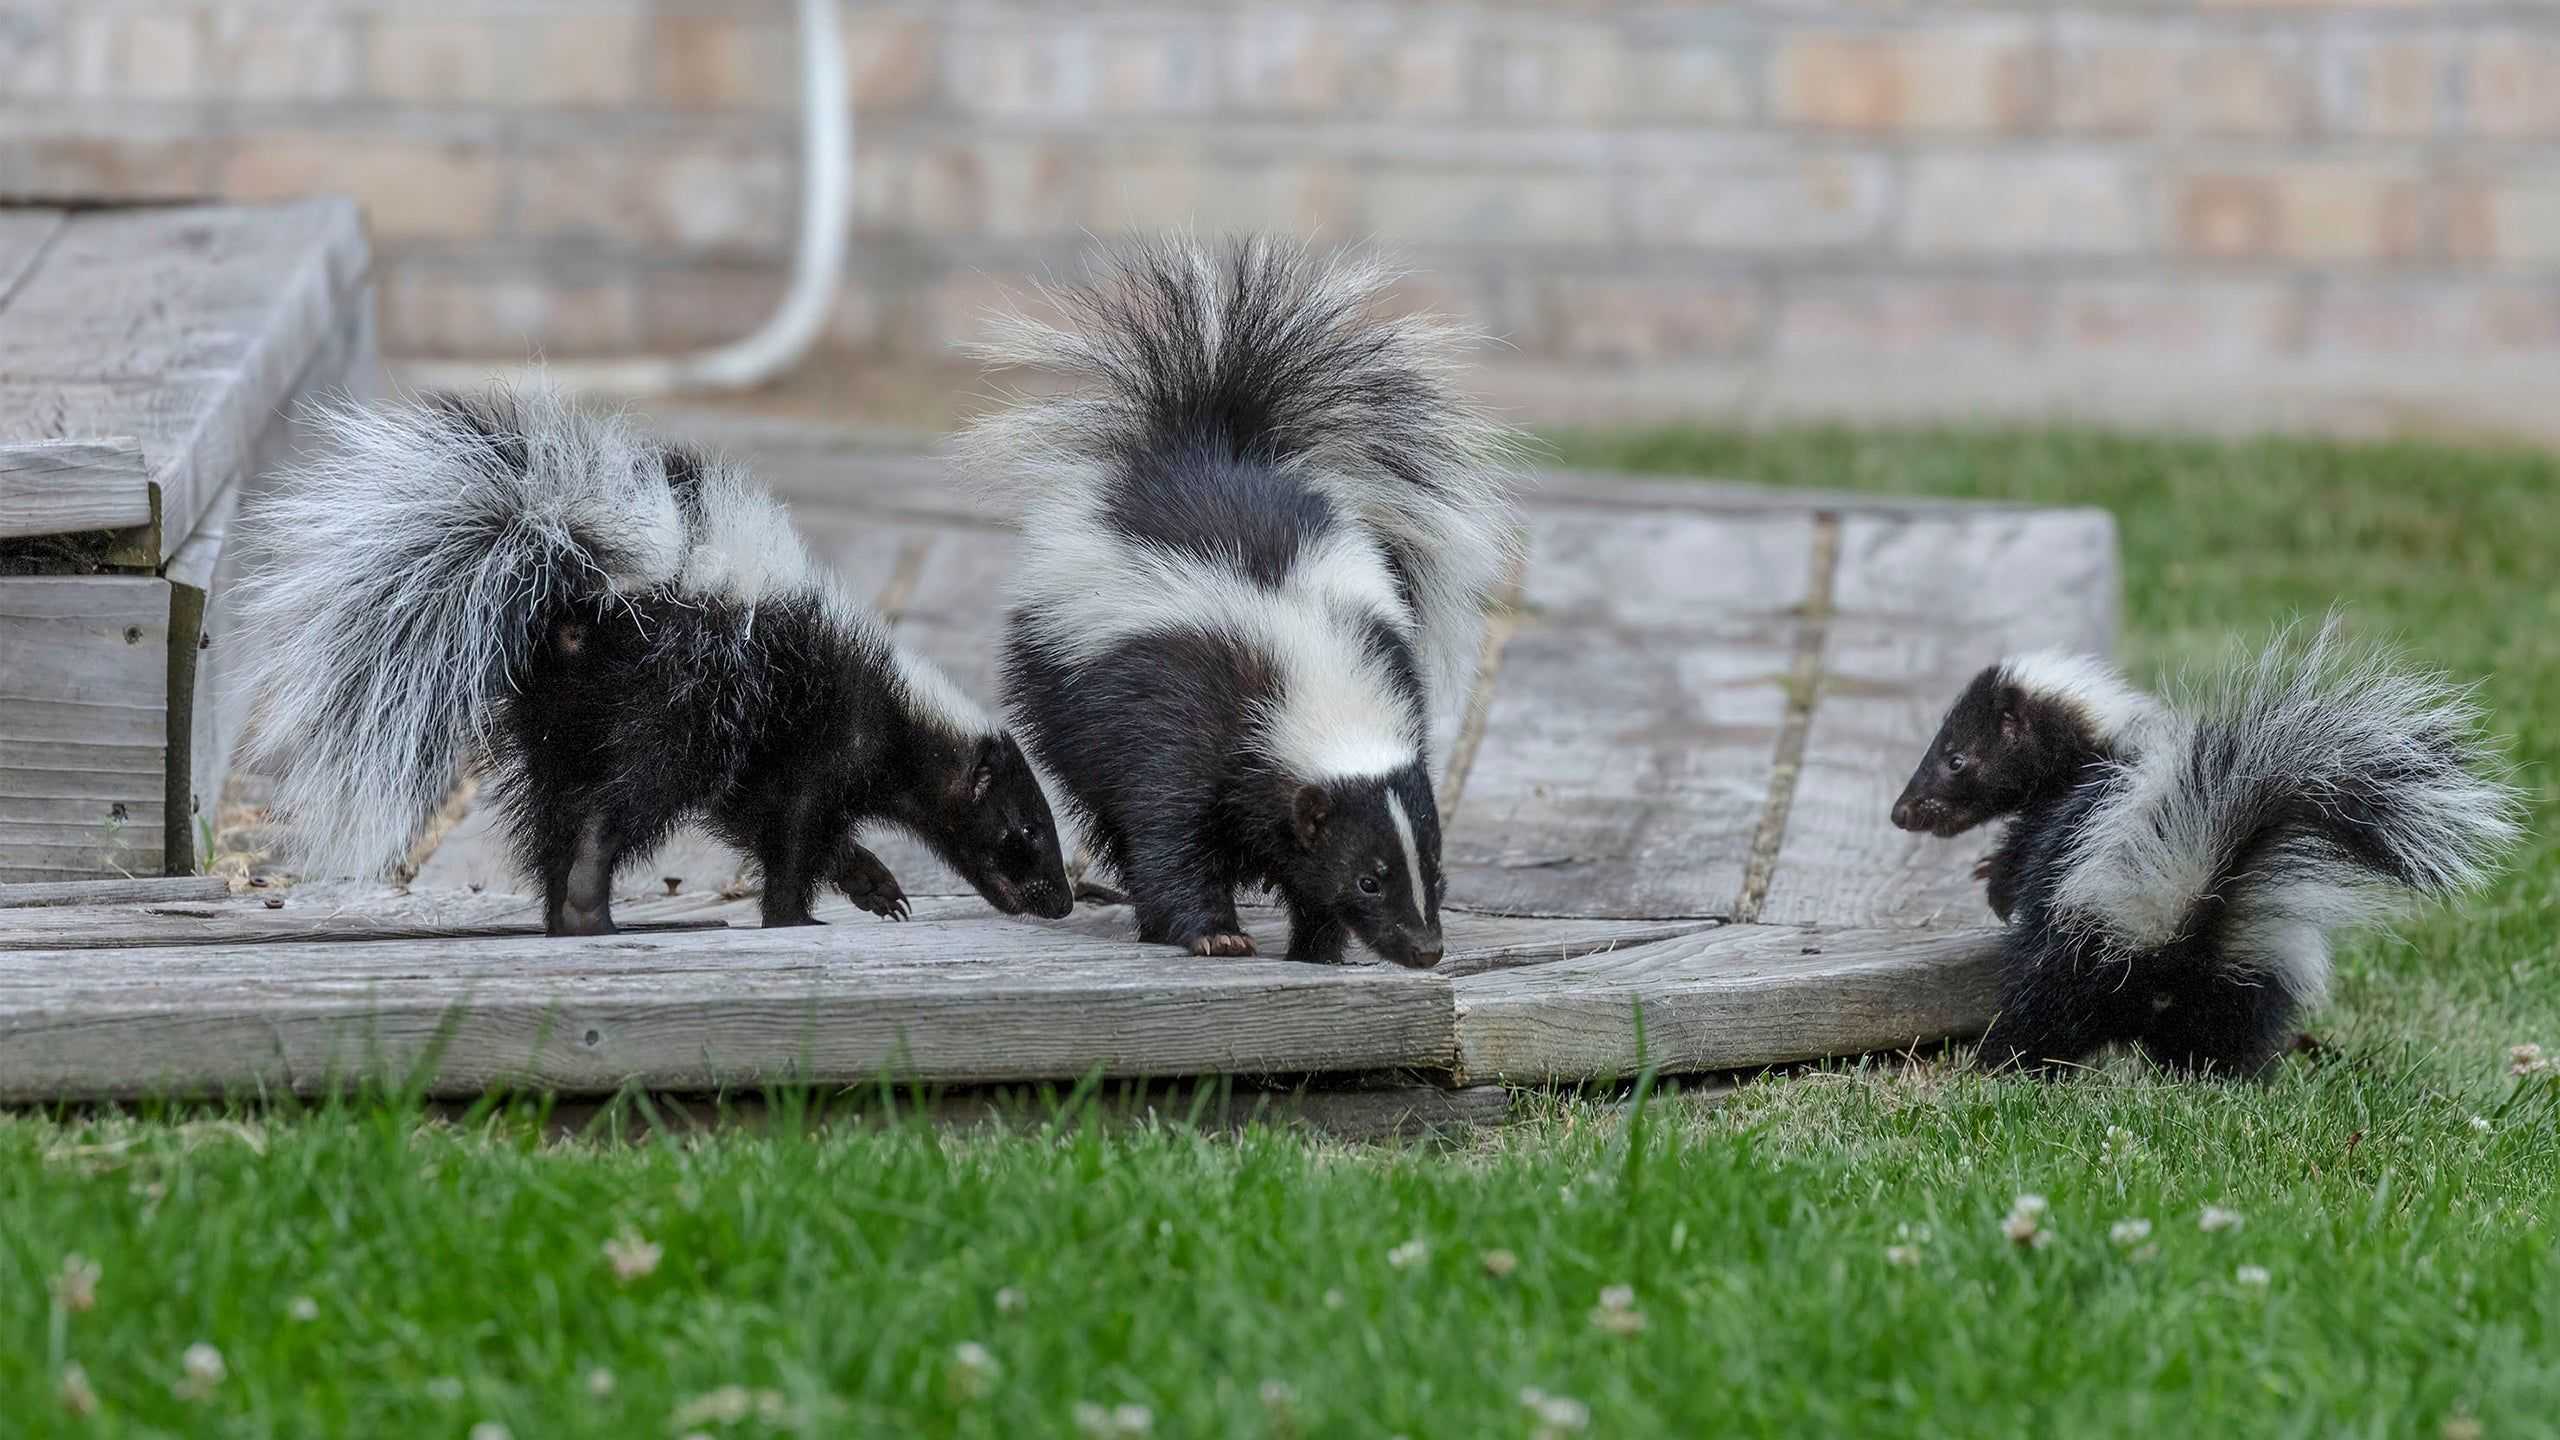 skunks near a patio